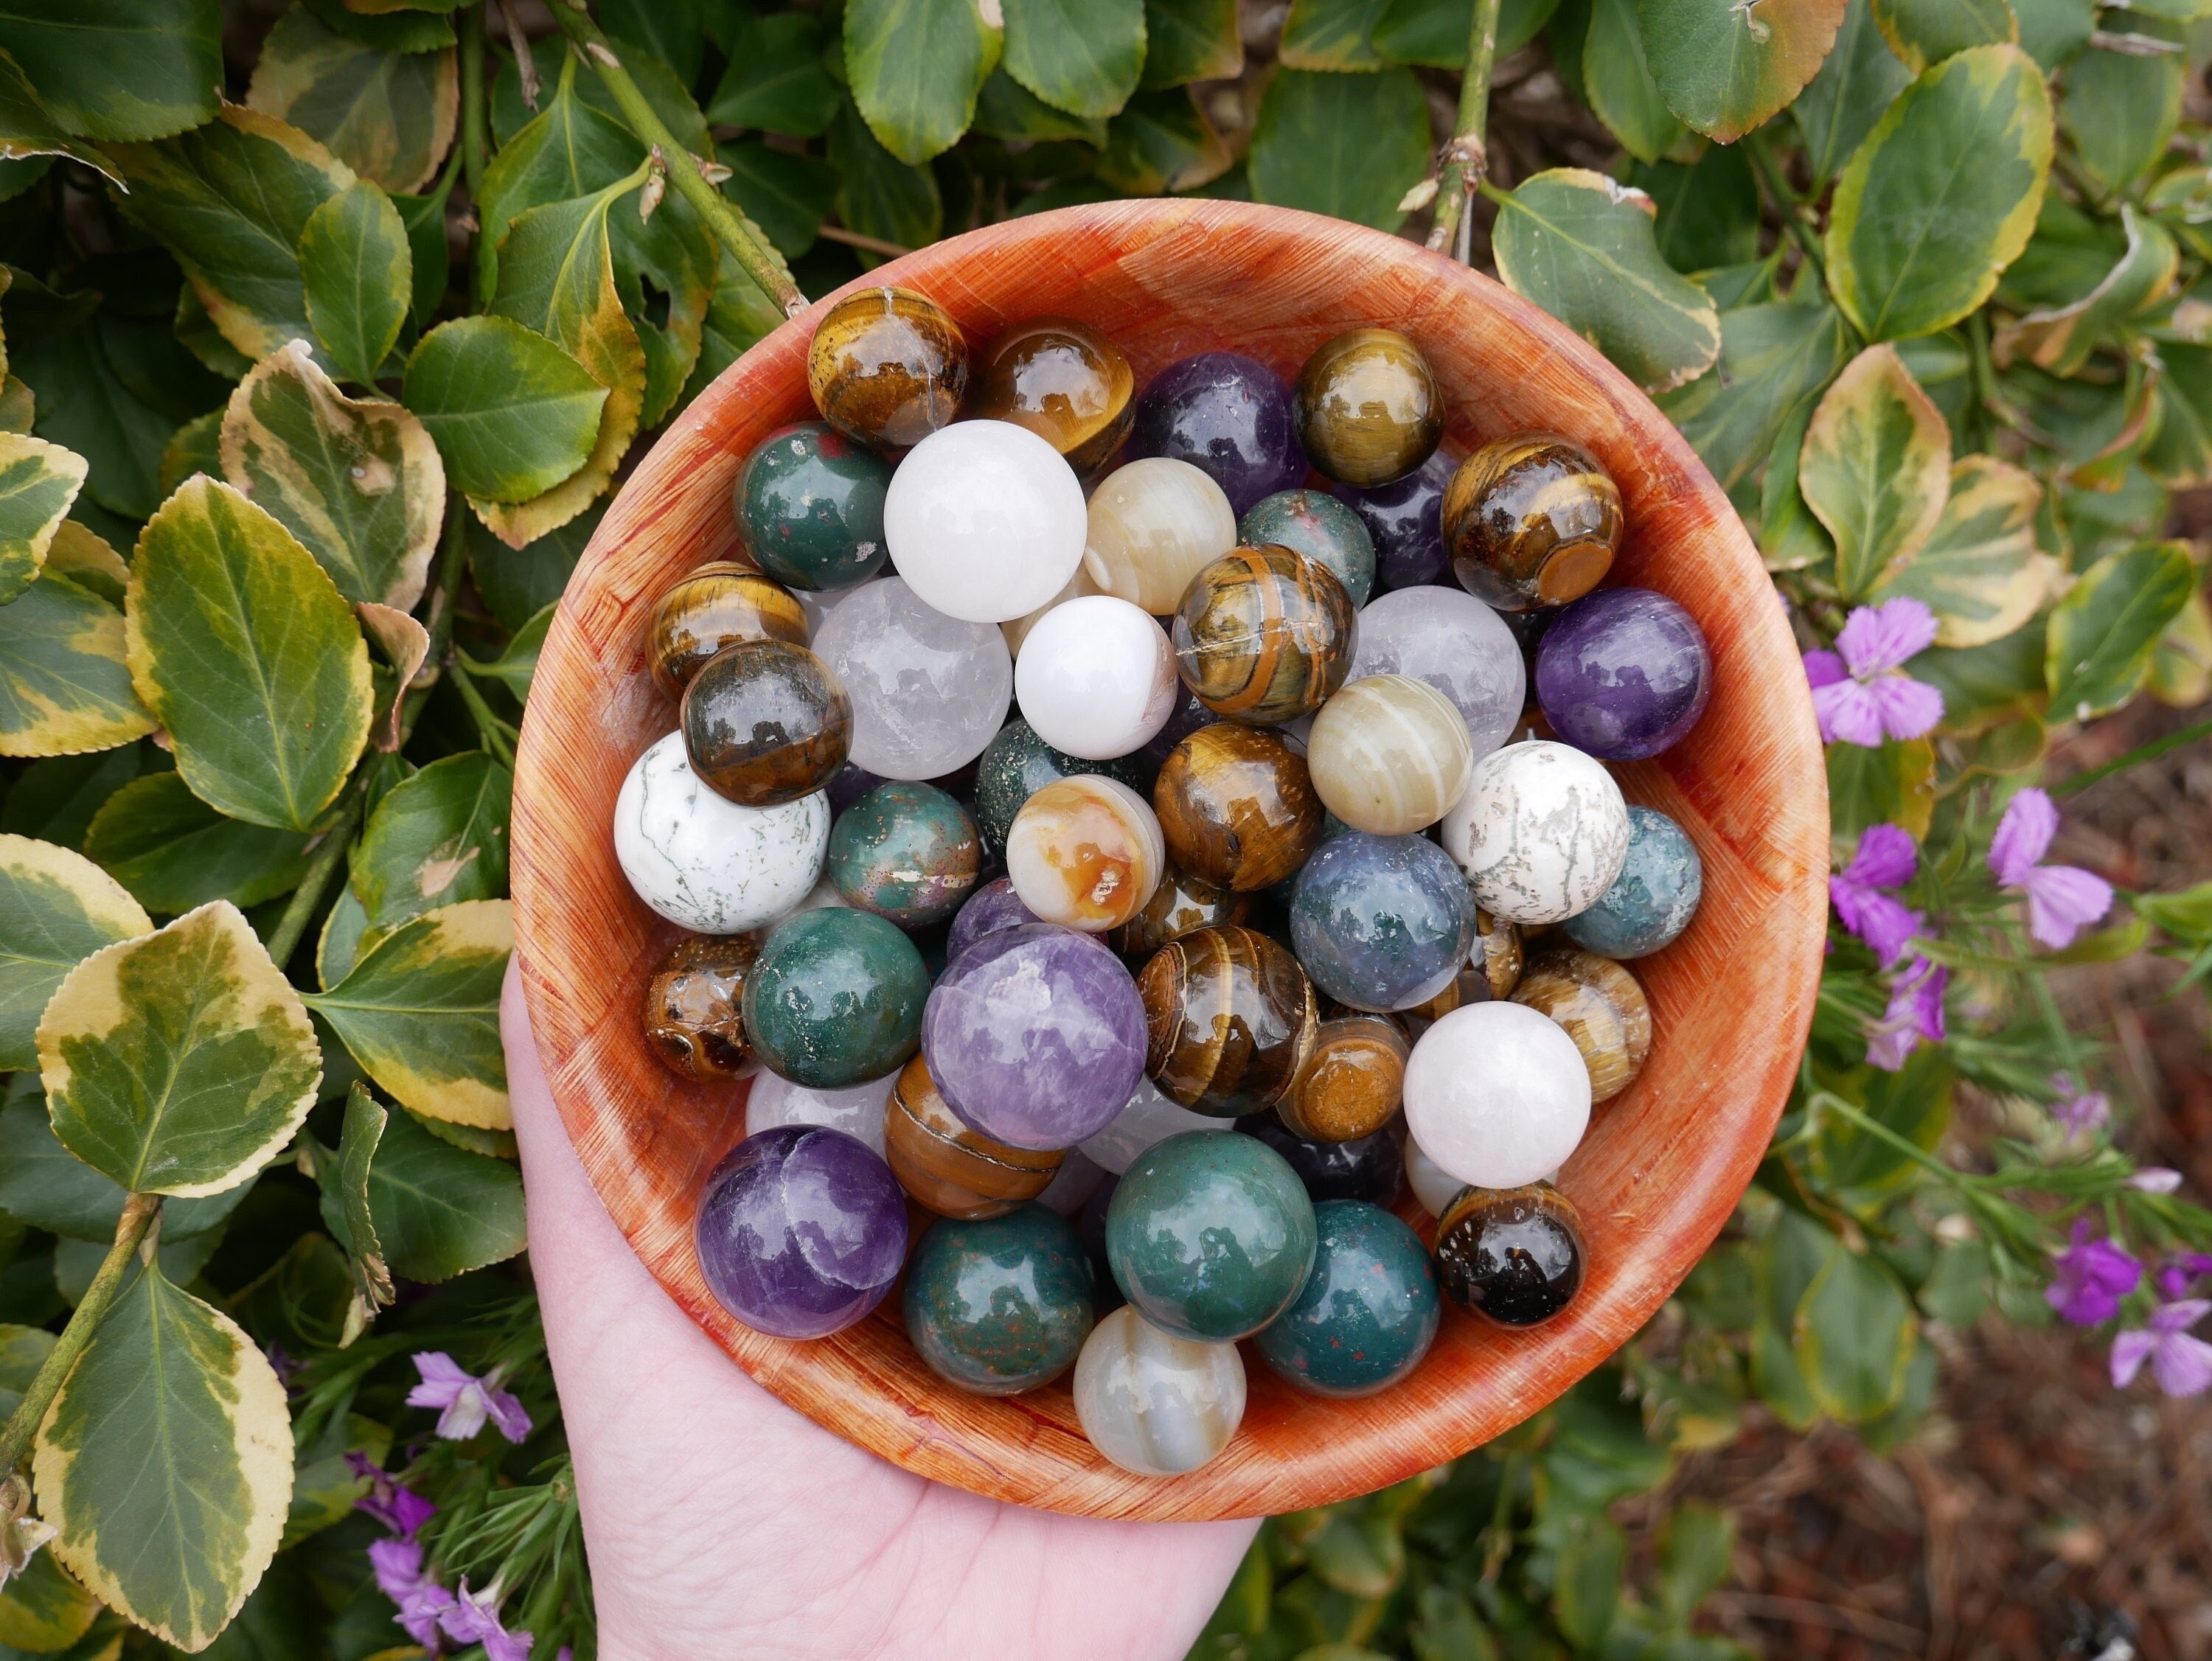 Moss Balls-decorative Sphere Orb for Vase Bowl Fillers or Dough  Bowl-farmhouse Decor-choose 2, 3, 4, 5, 6, 8, 10, 12, 14 or 16 